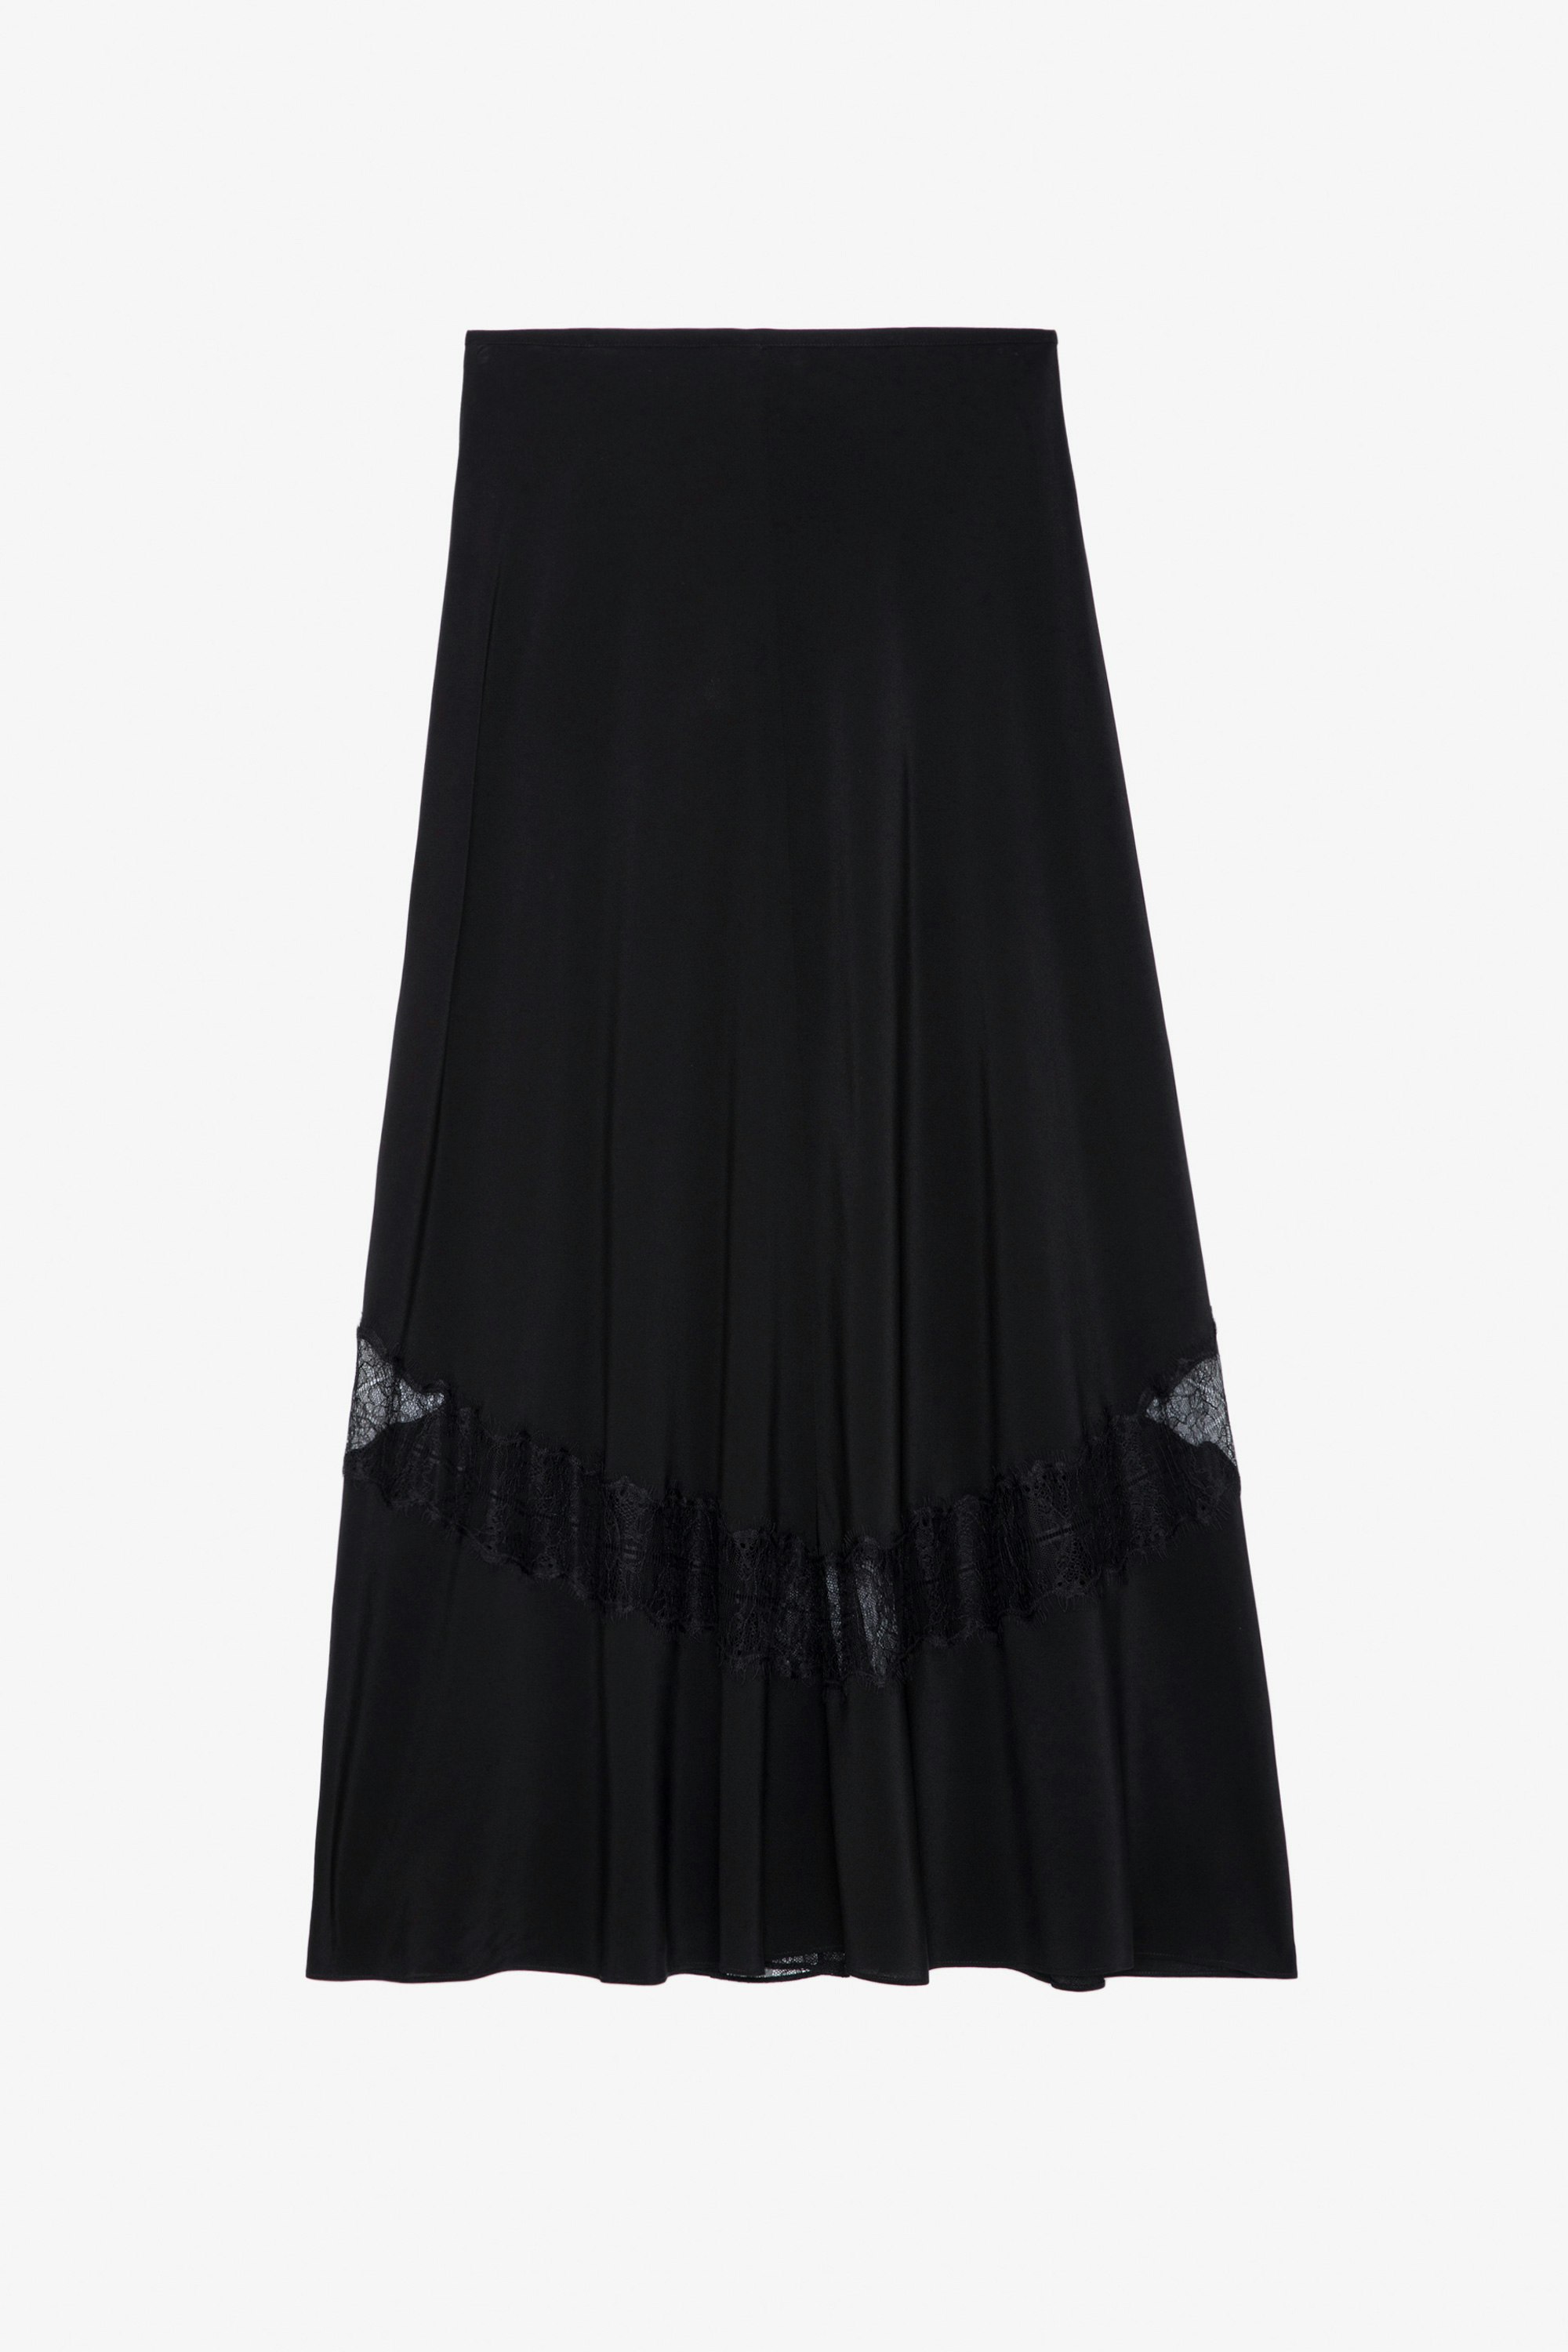 Jaylal Silk Skirt - Women’s black silk midi skirt with zip fastening, splits and lace detailing.